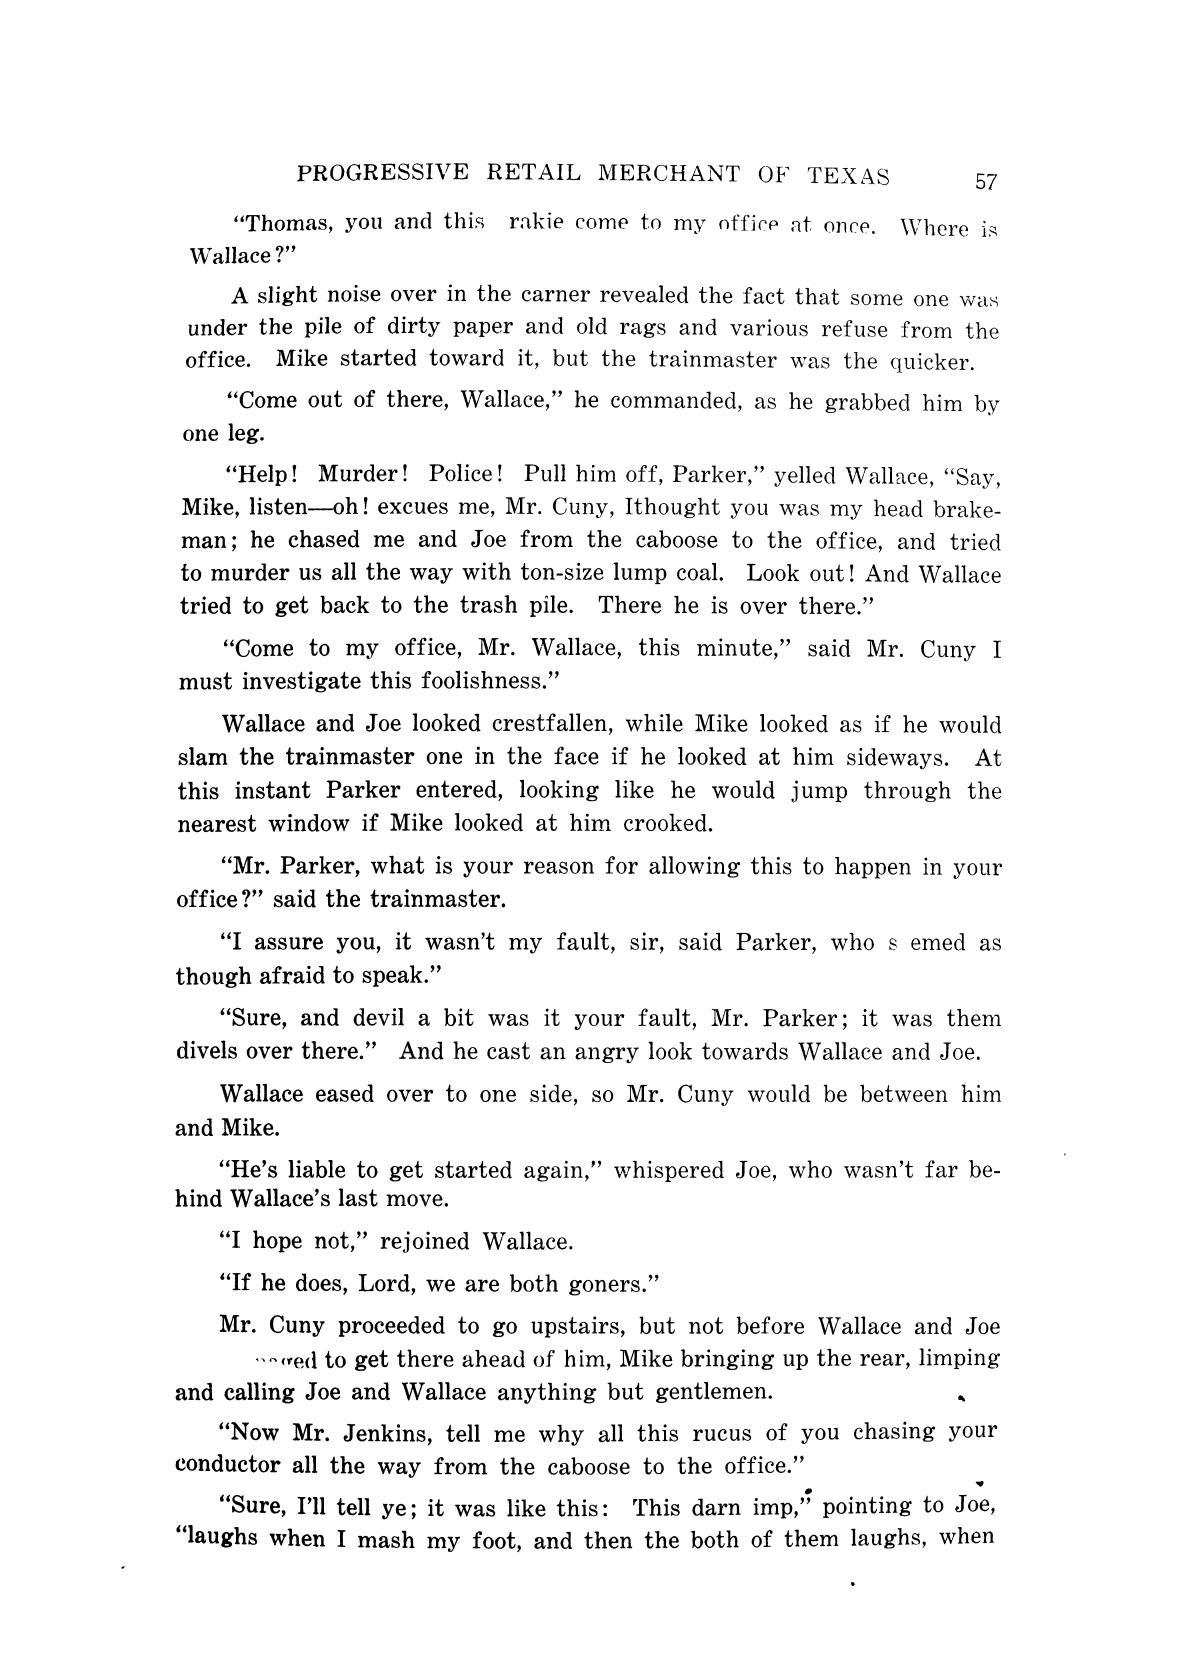 Progresive Retail Merchant of Texas, Volume 1, Number 2, July 1915
                                                
                                                    57
                                                